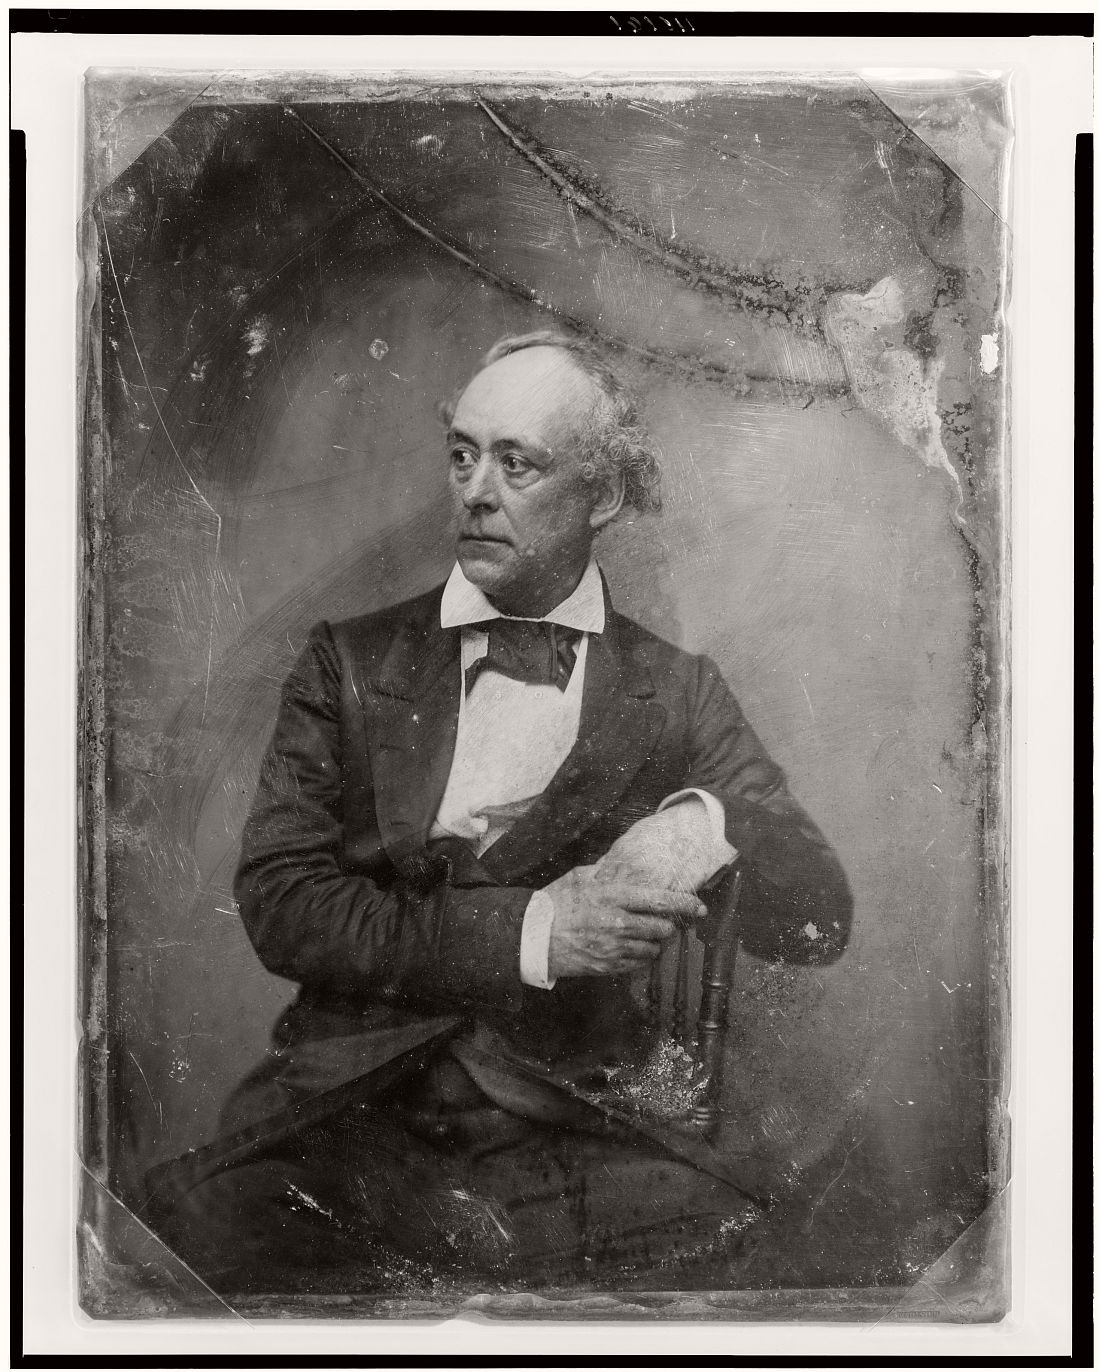 vintage-daguerreotype-portraits-from-xix-century-1844-1860-62